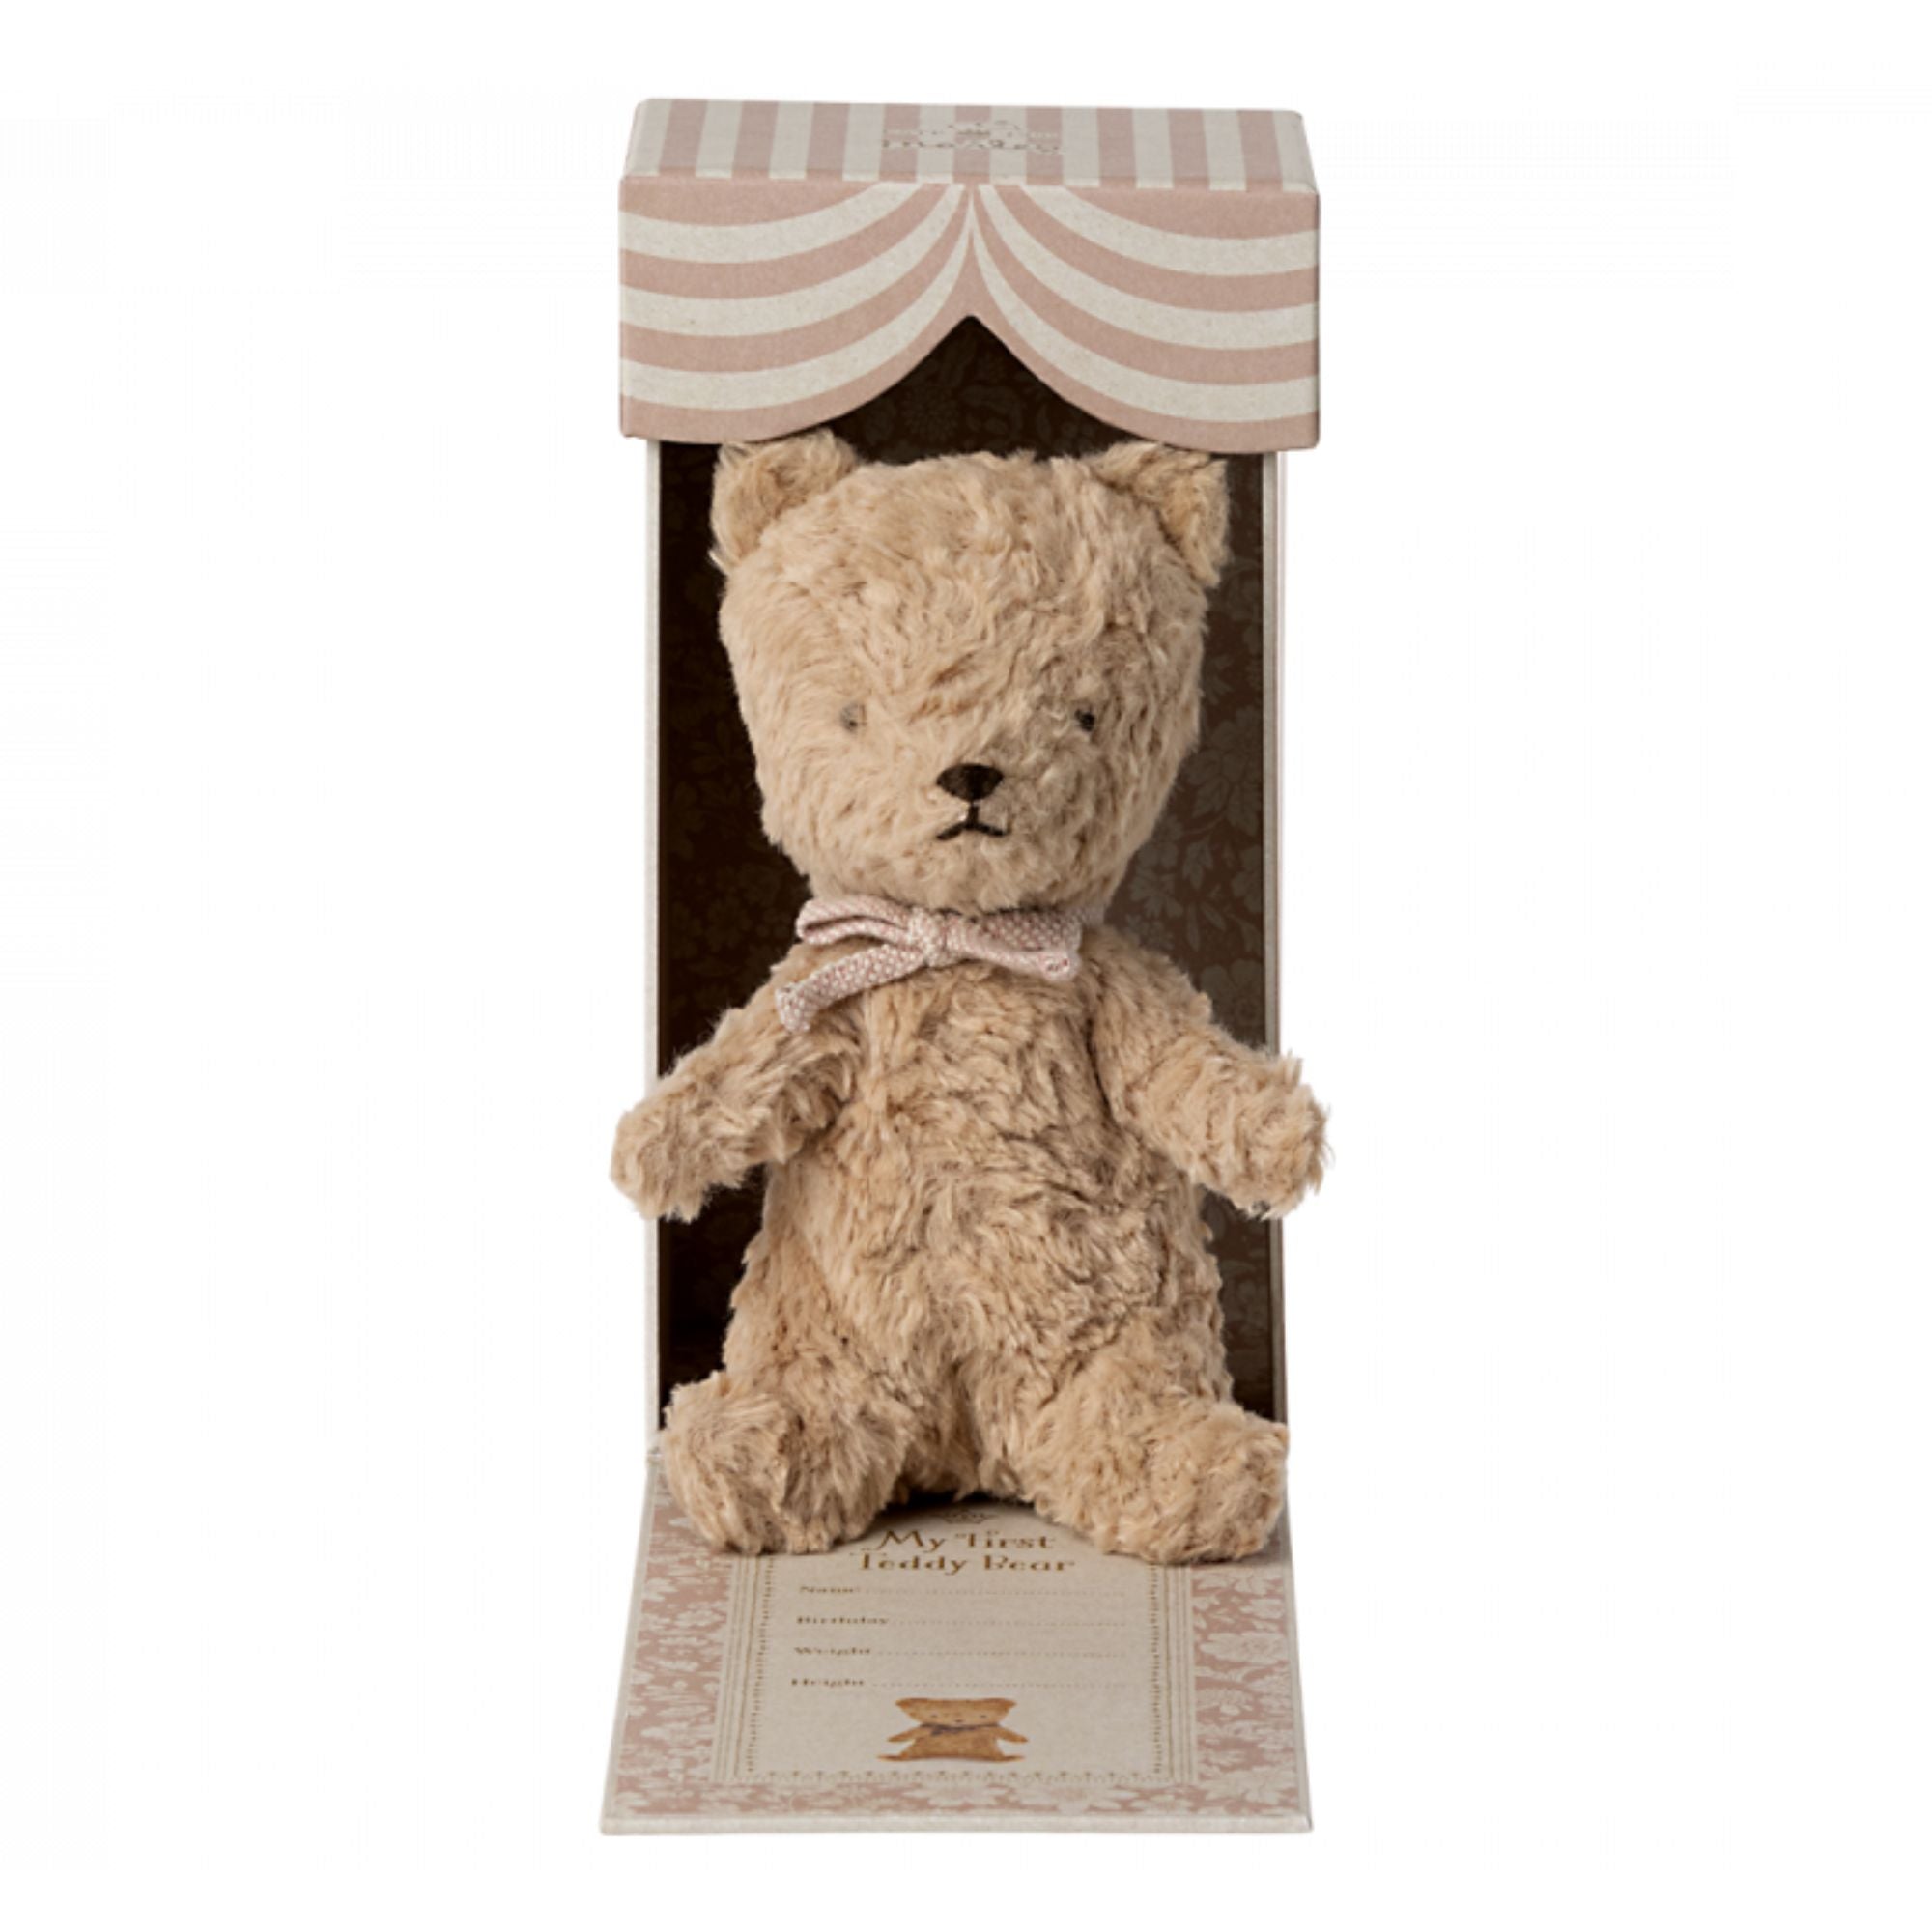 Maileg Teddy bear in a pink box